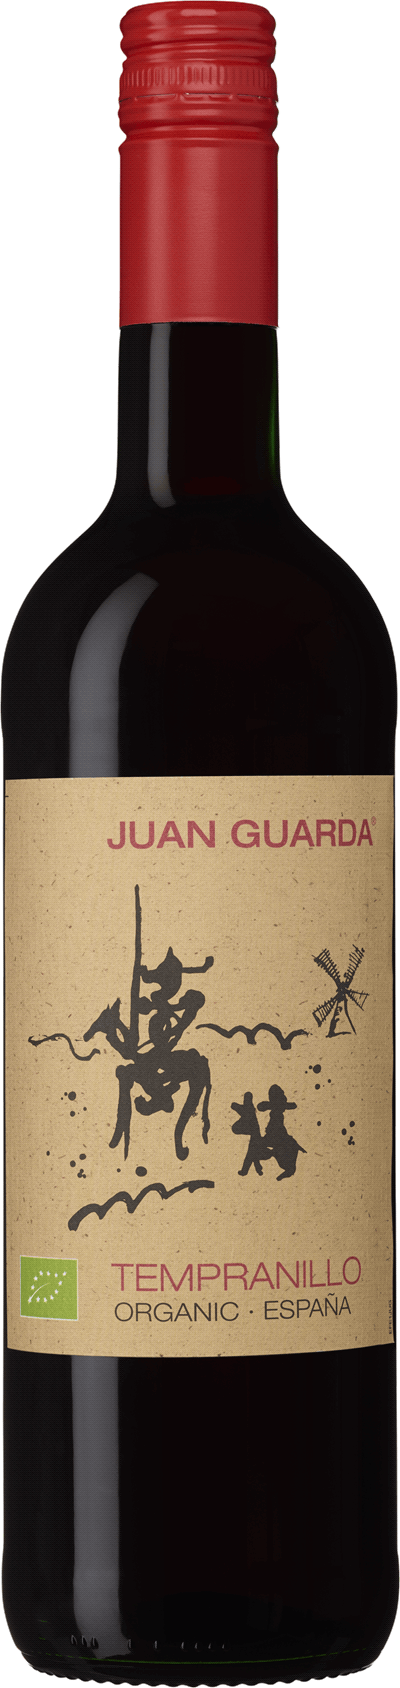 750 Tempranillo cl, kr 2019, - Juan Guarda Cocktailguiden 65